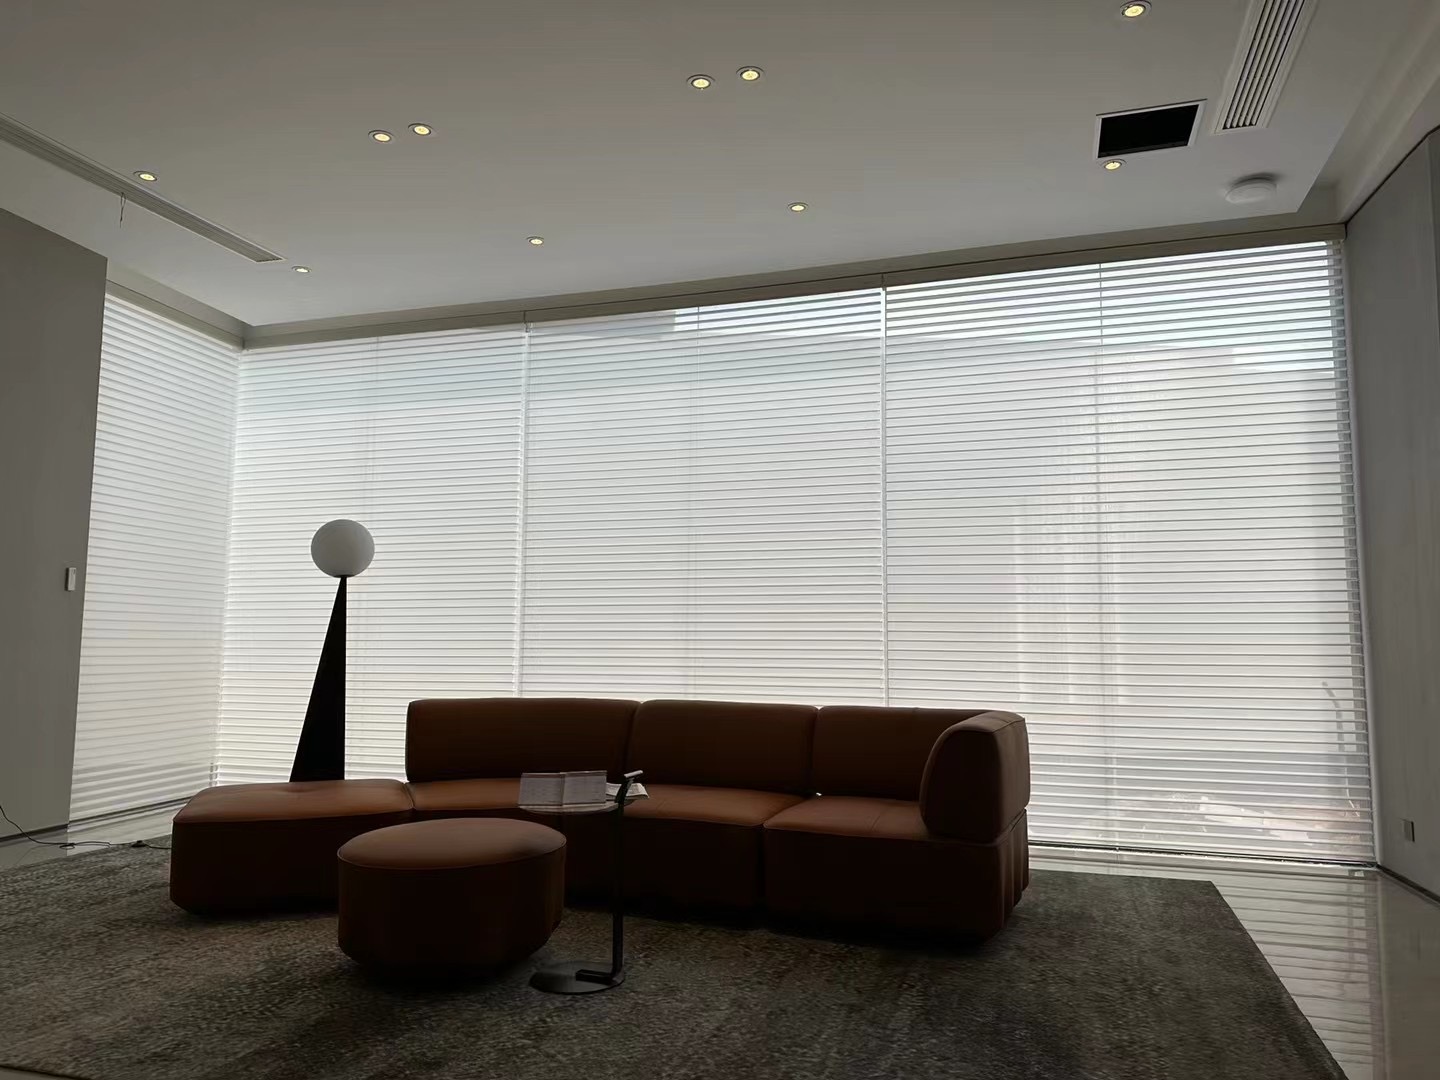 living room shangrila blinds